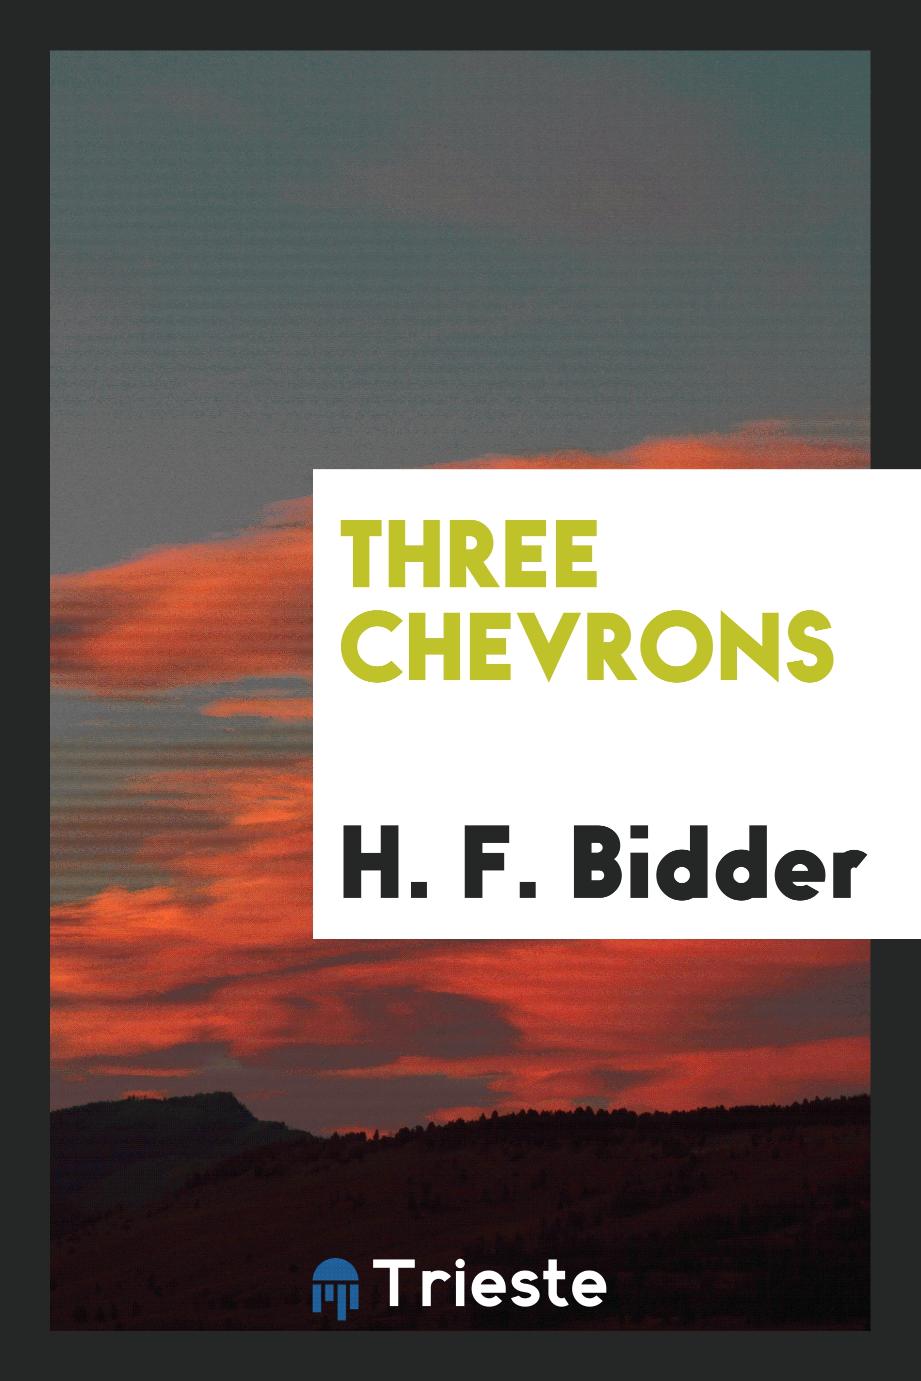 Three chevrons